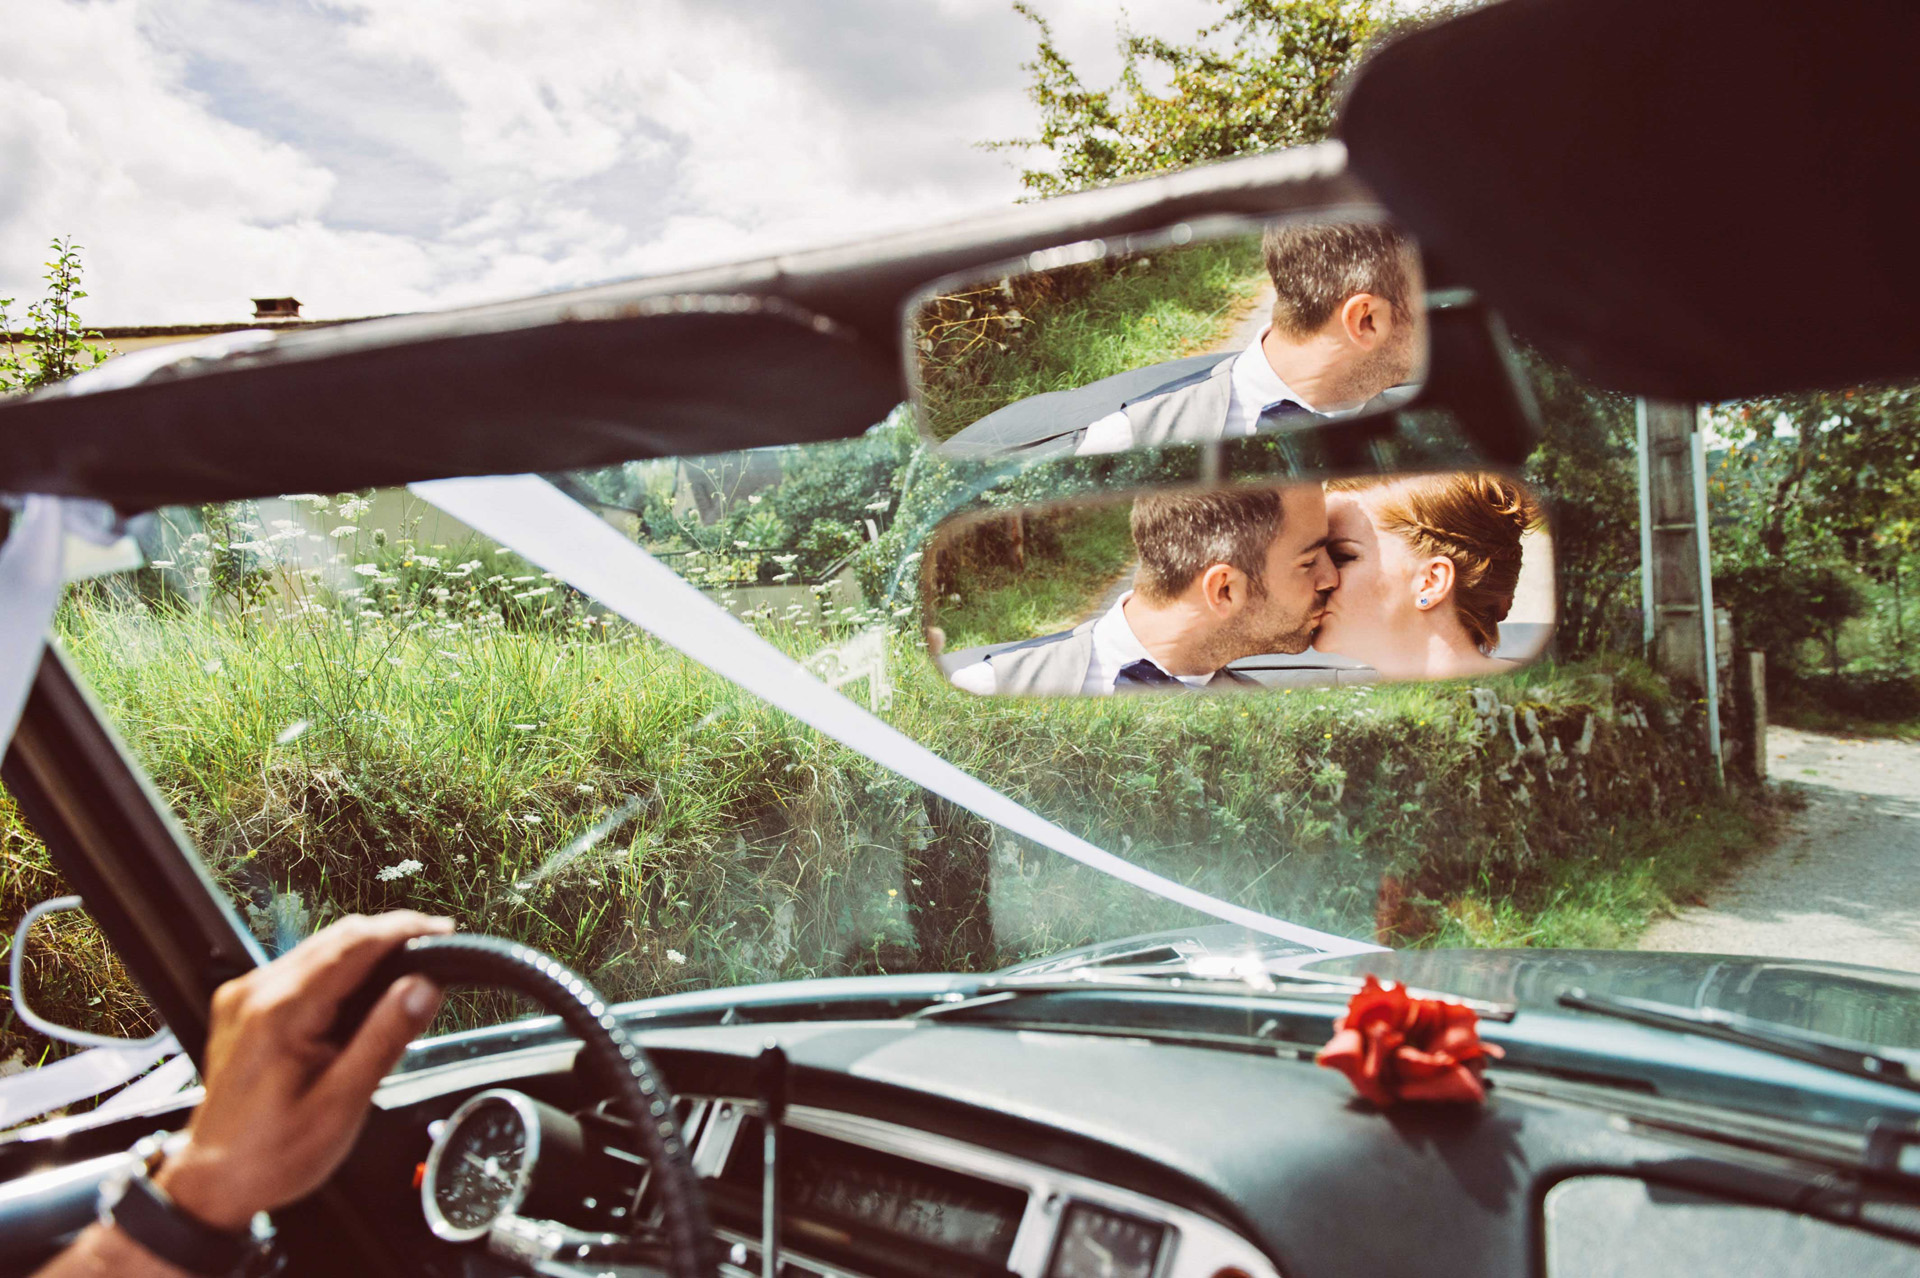 Car driving, couple kissing in mirror, married, wedding, destination wedding, boho wedding